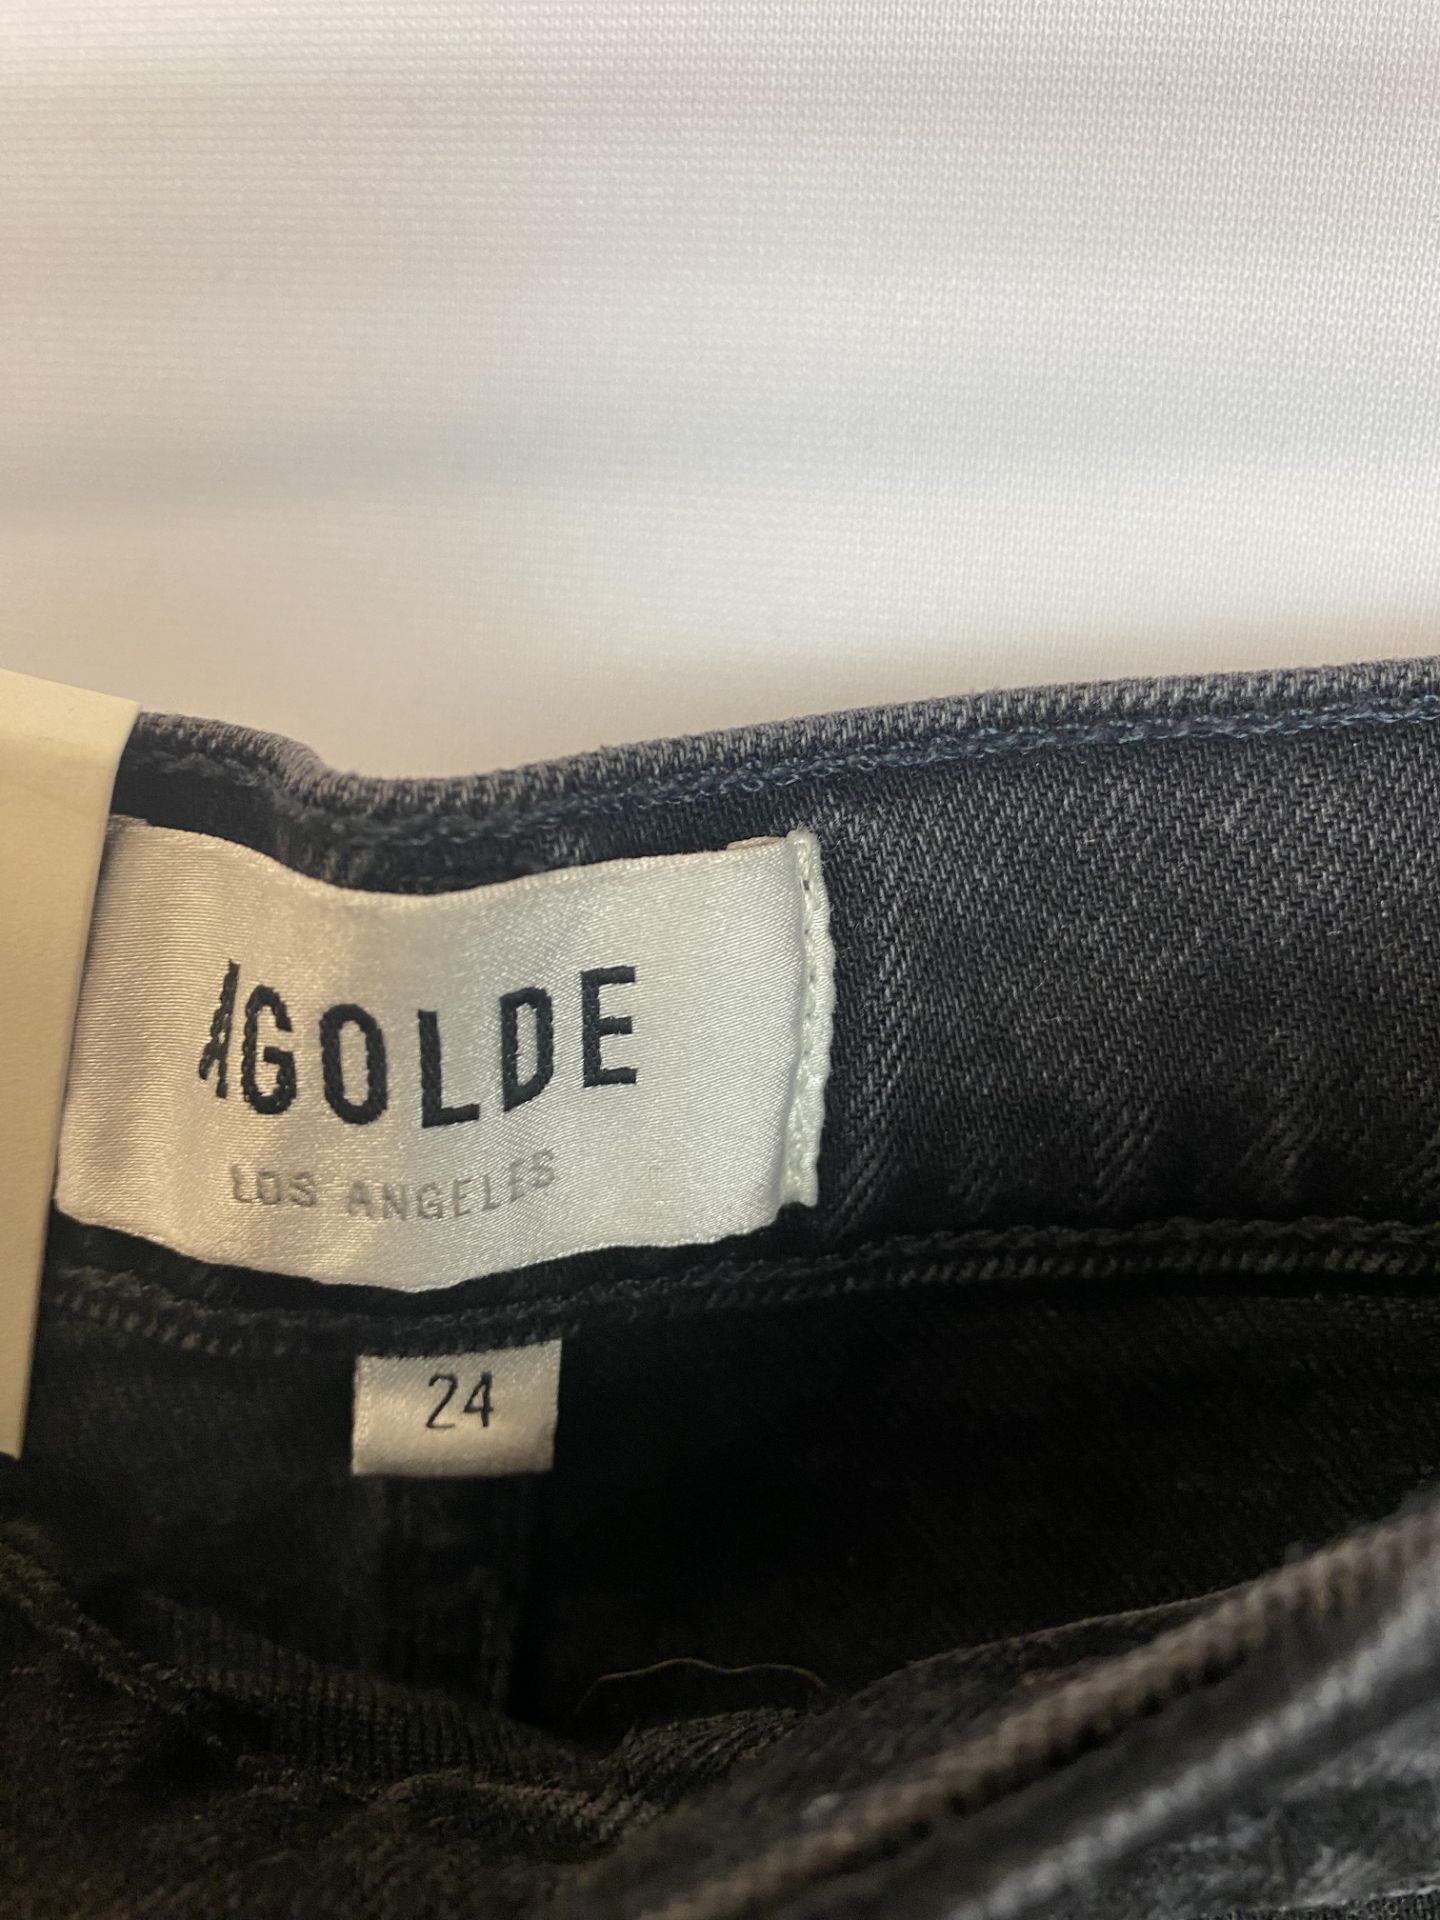 Agolde Riley Black Straight Leg Black Denim Jean, Size 24, Original Retail Price: $188 - Bild 4 aus 4